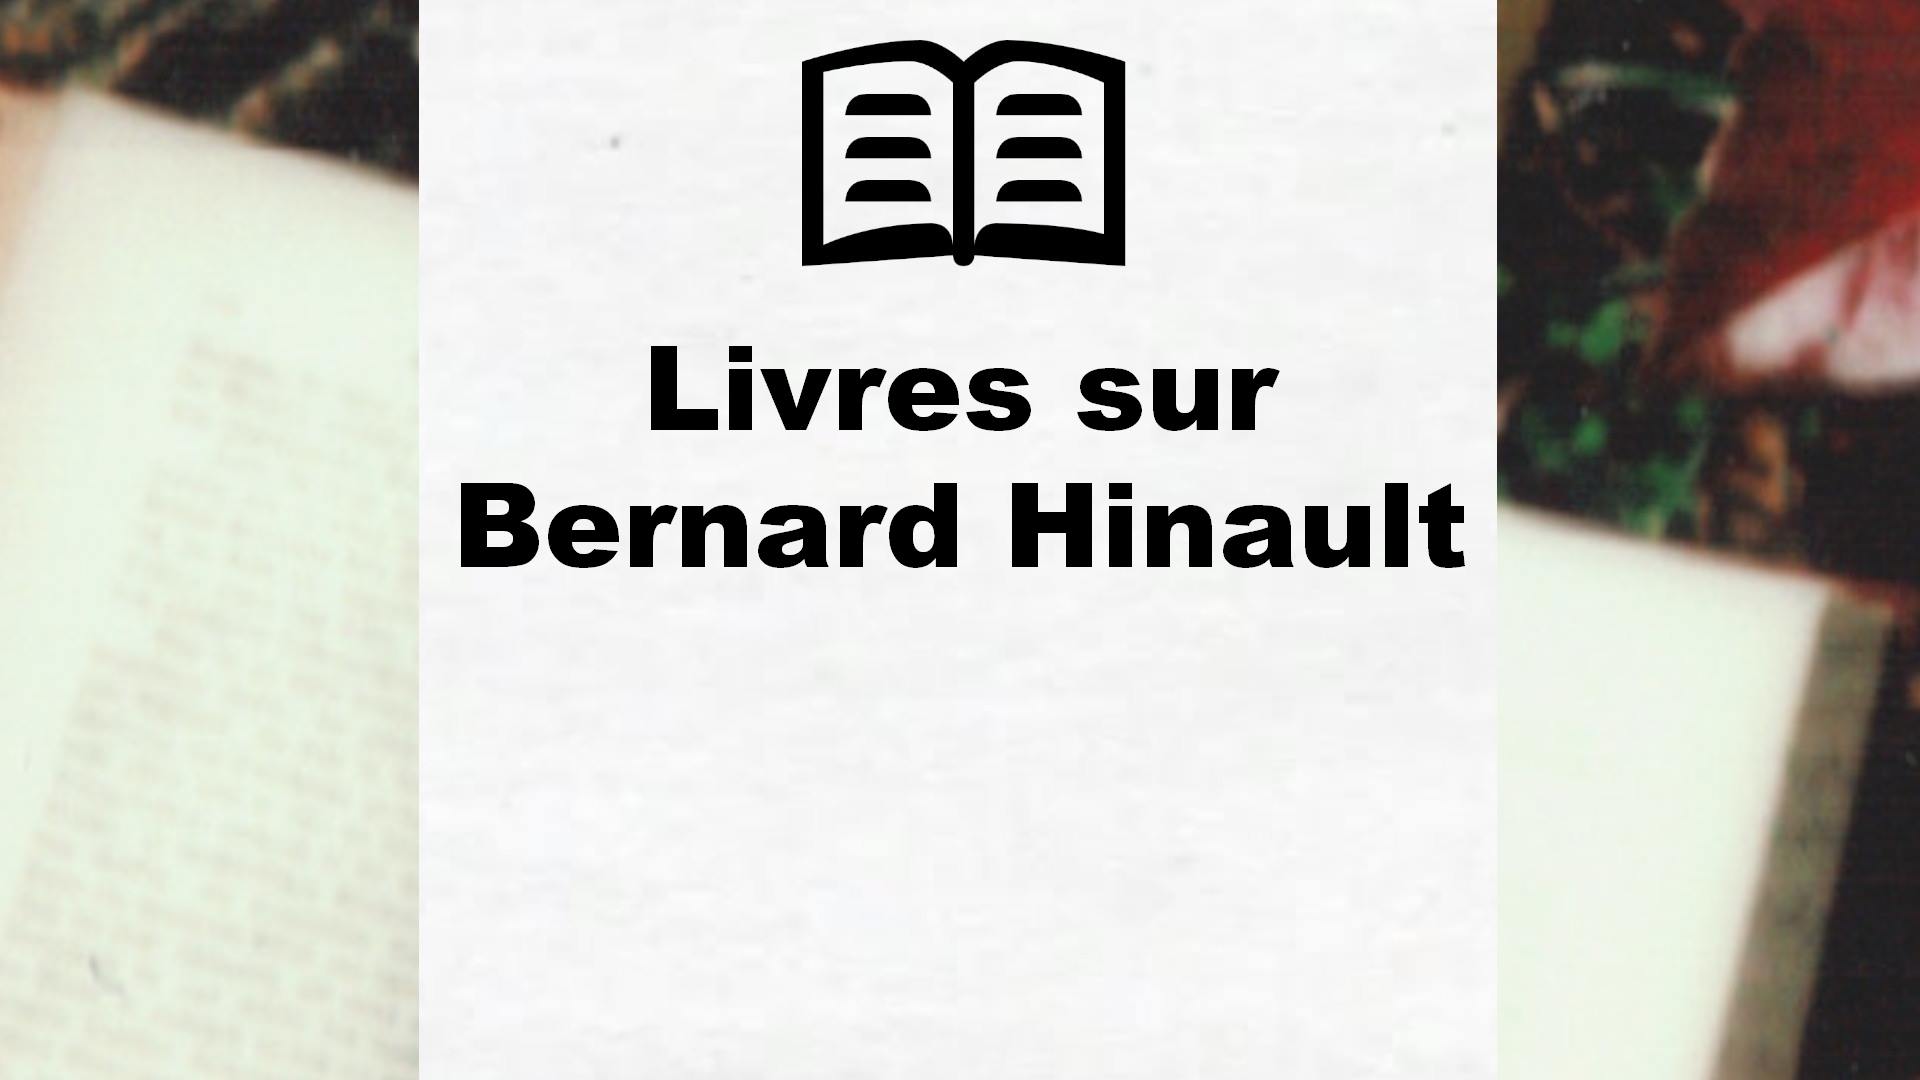 Livres sur Bernard Hinault